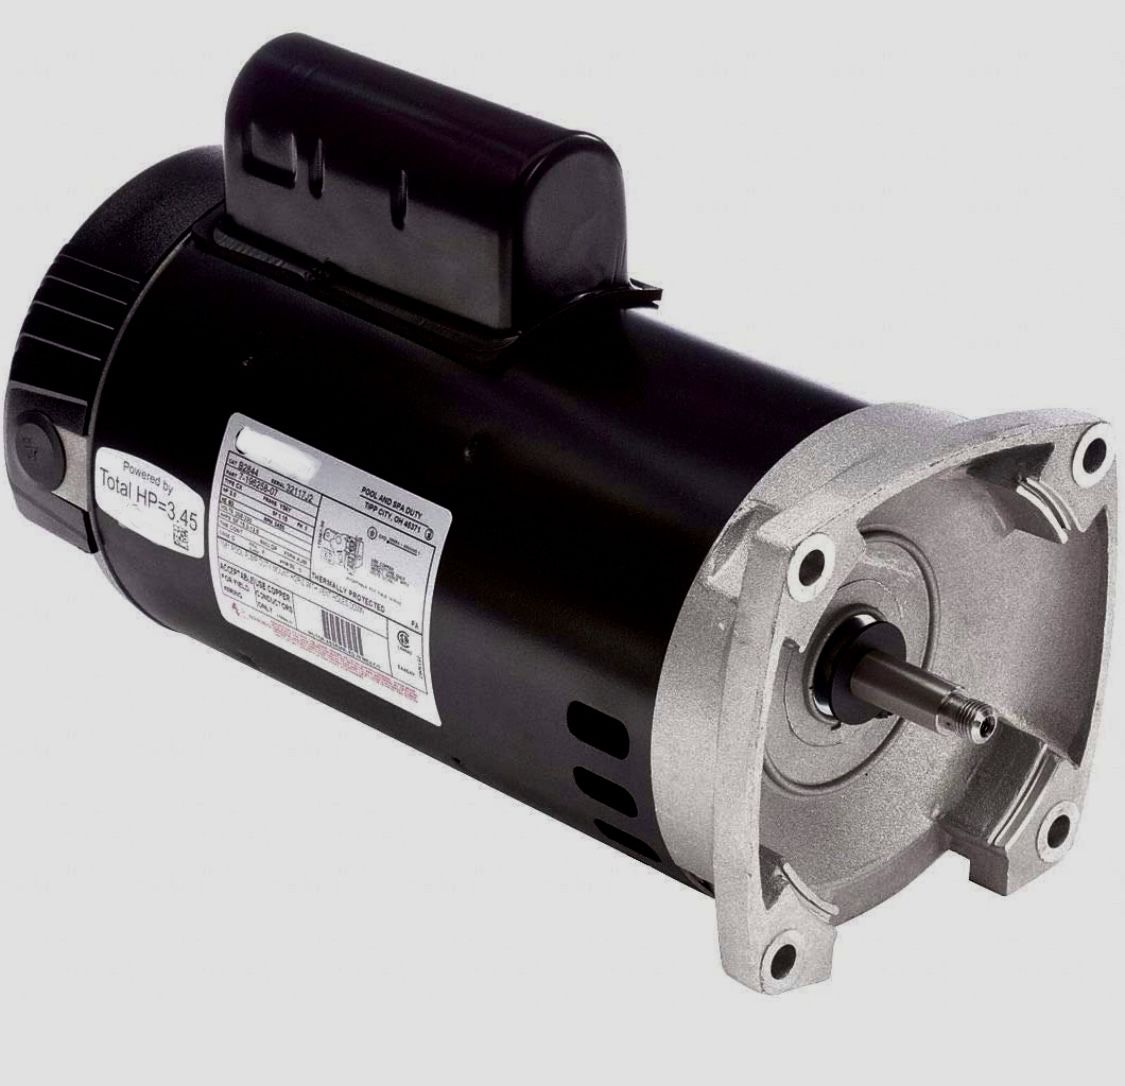 US Motors 3-HP Pool Pump w/ Auto Thermal Protection & FREE Alladin Pump Repair Kit - NIB!